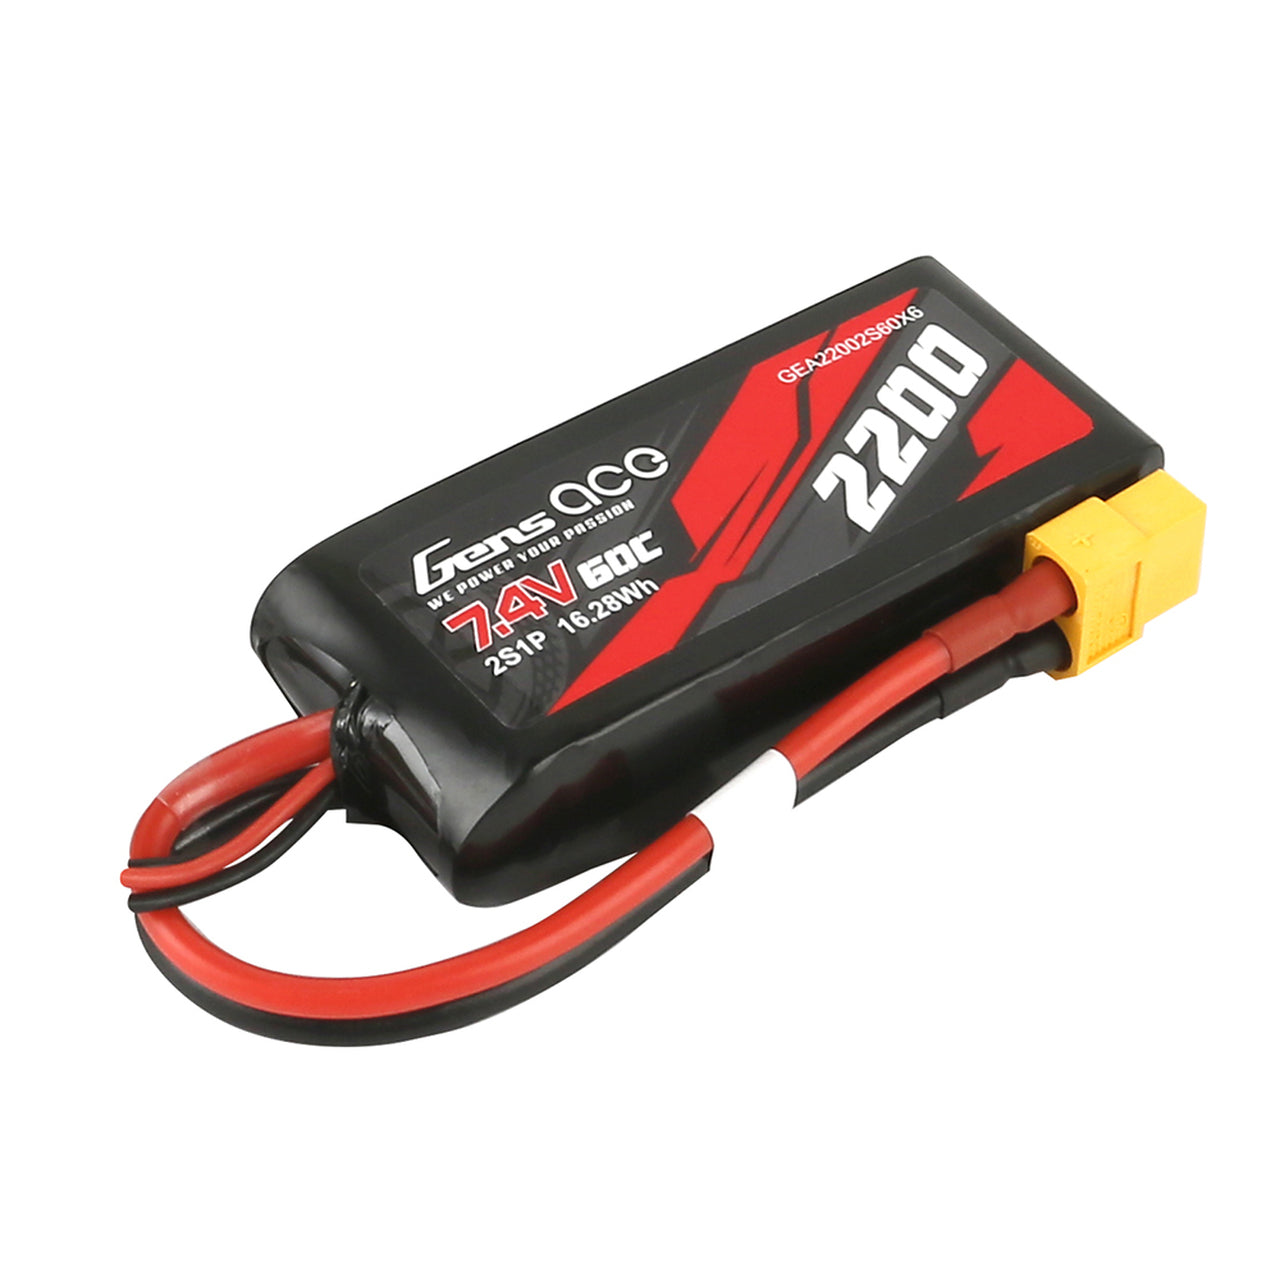 Batterie LI-PO 2S 7,4 v 1500 mah 25C 2 Stick Gens Ace